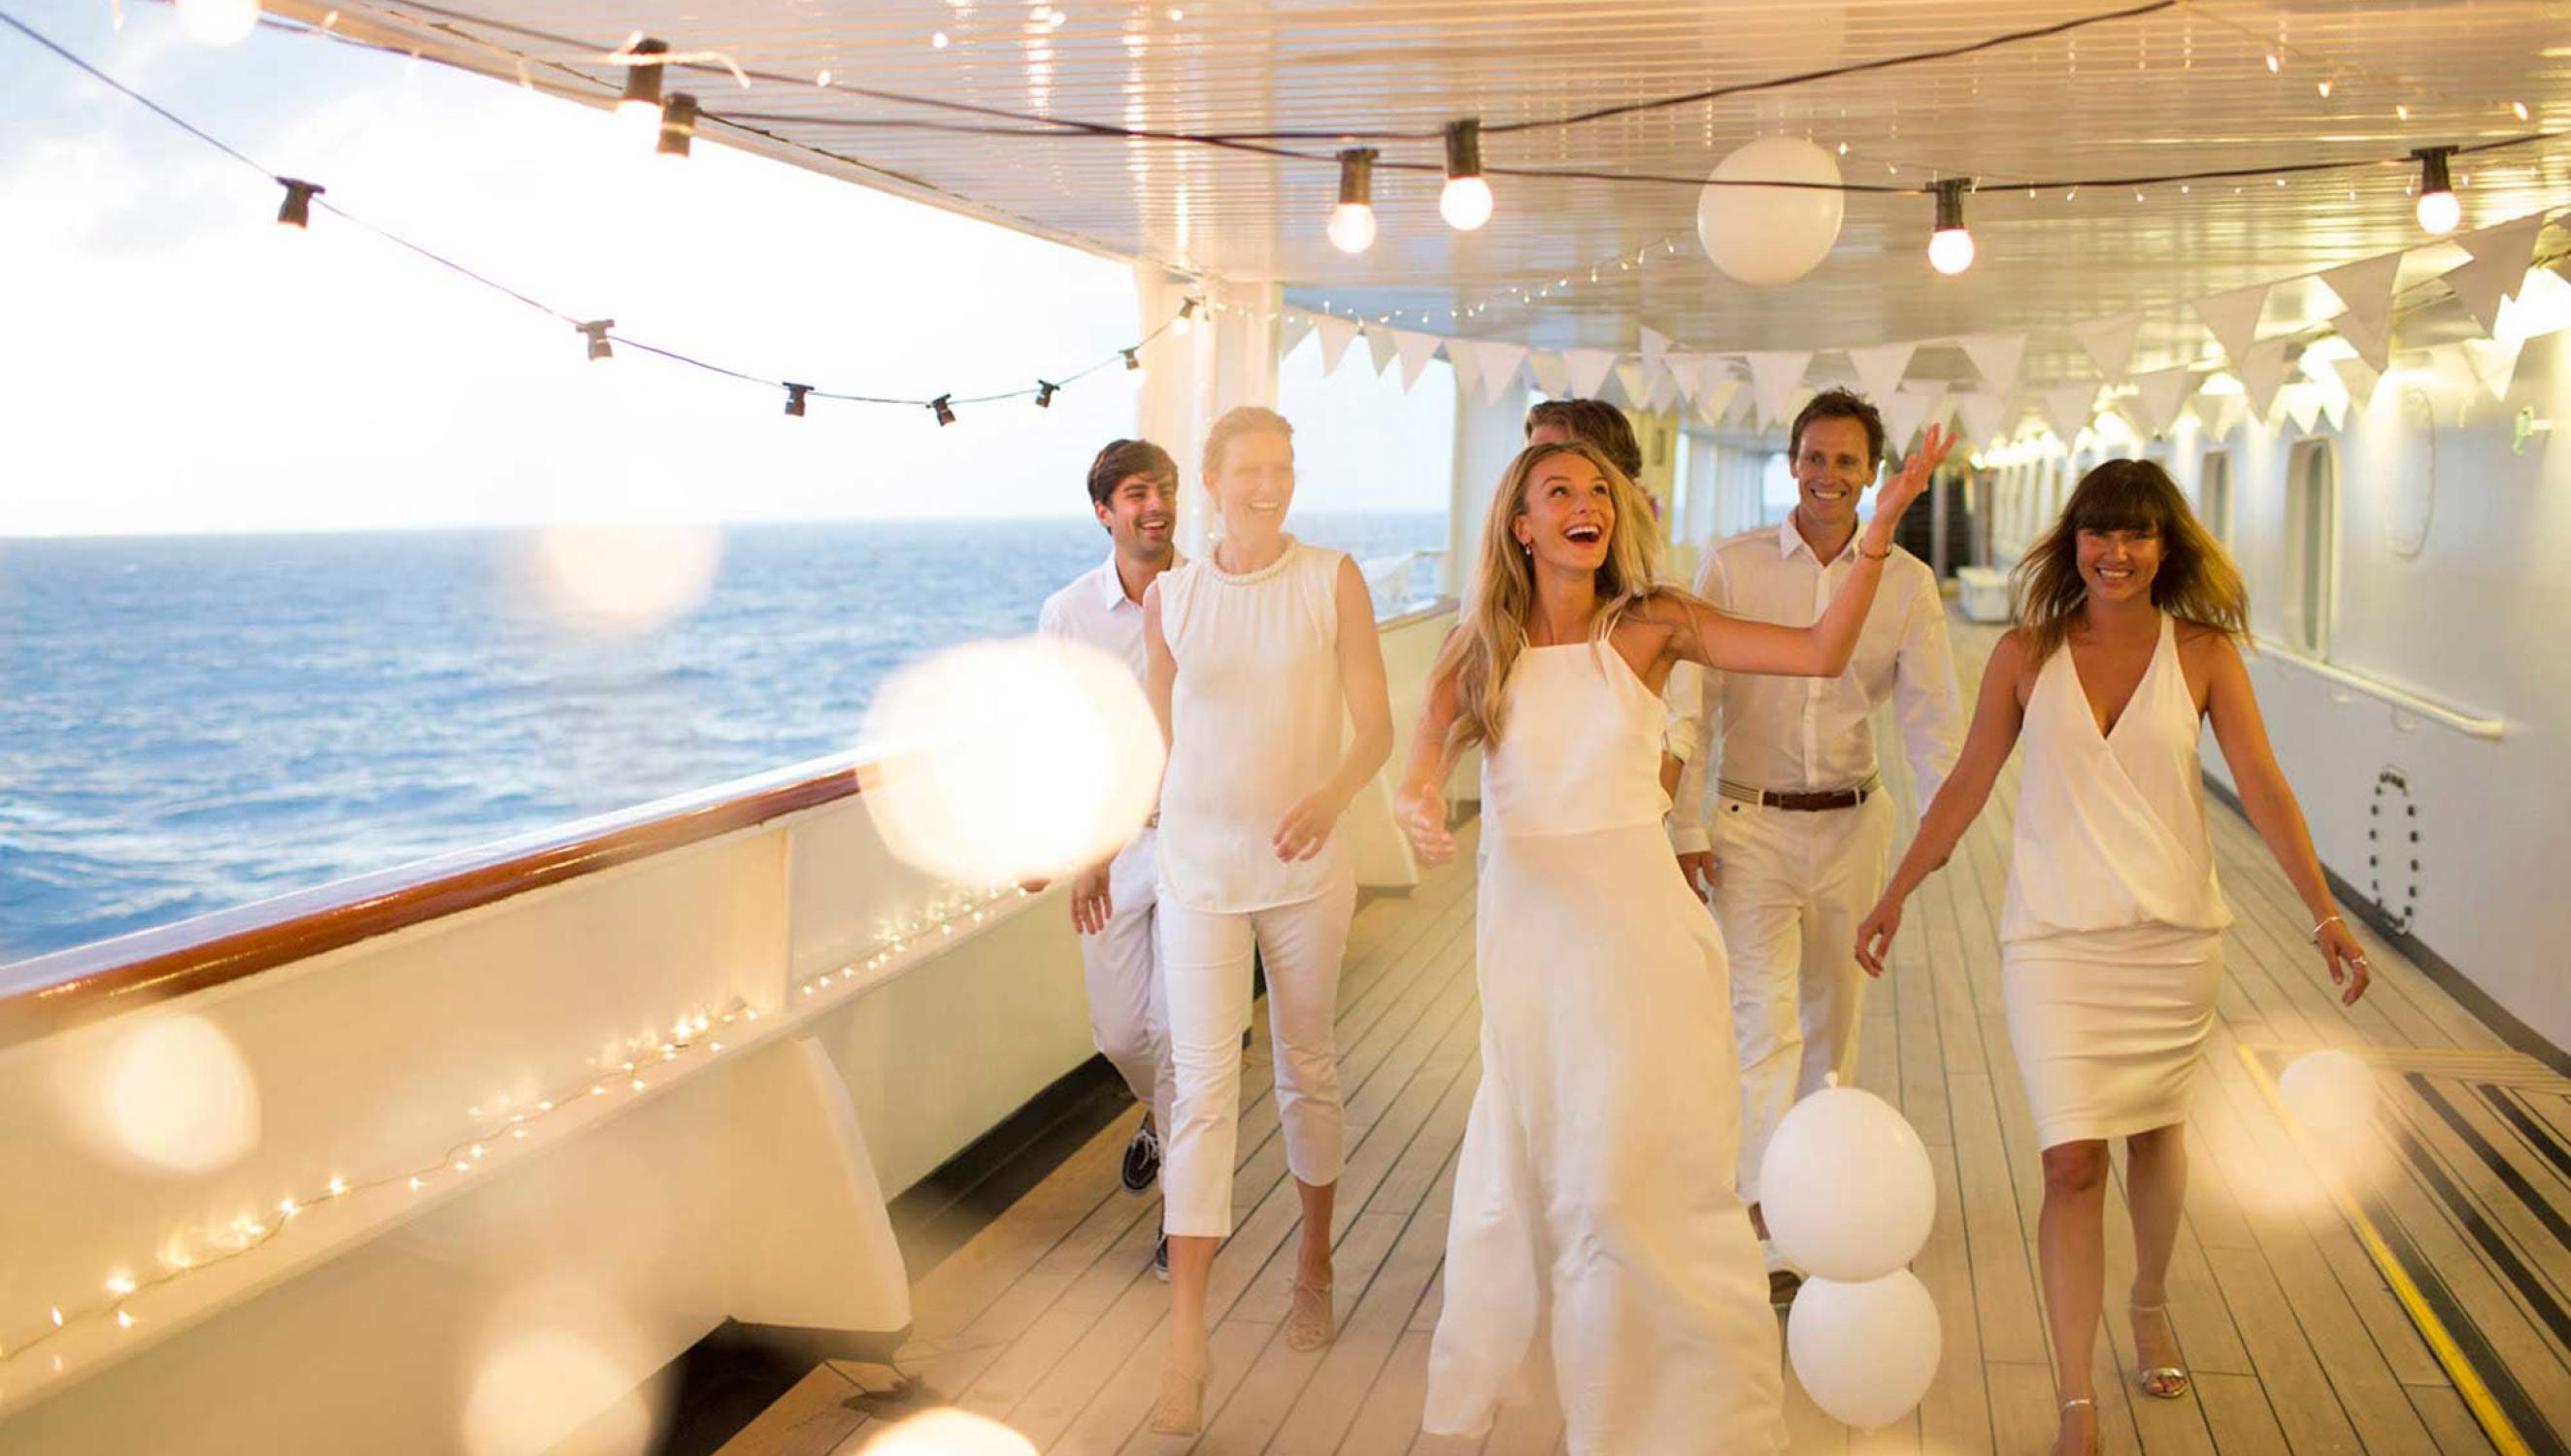 is a cruise ship wedding legal